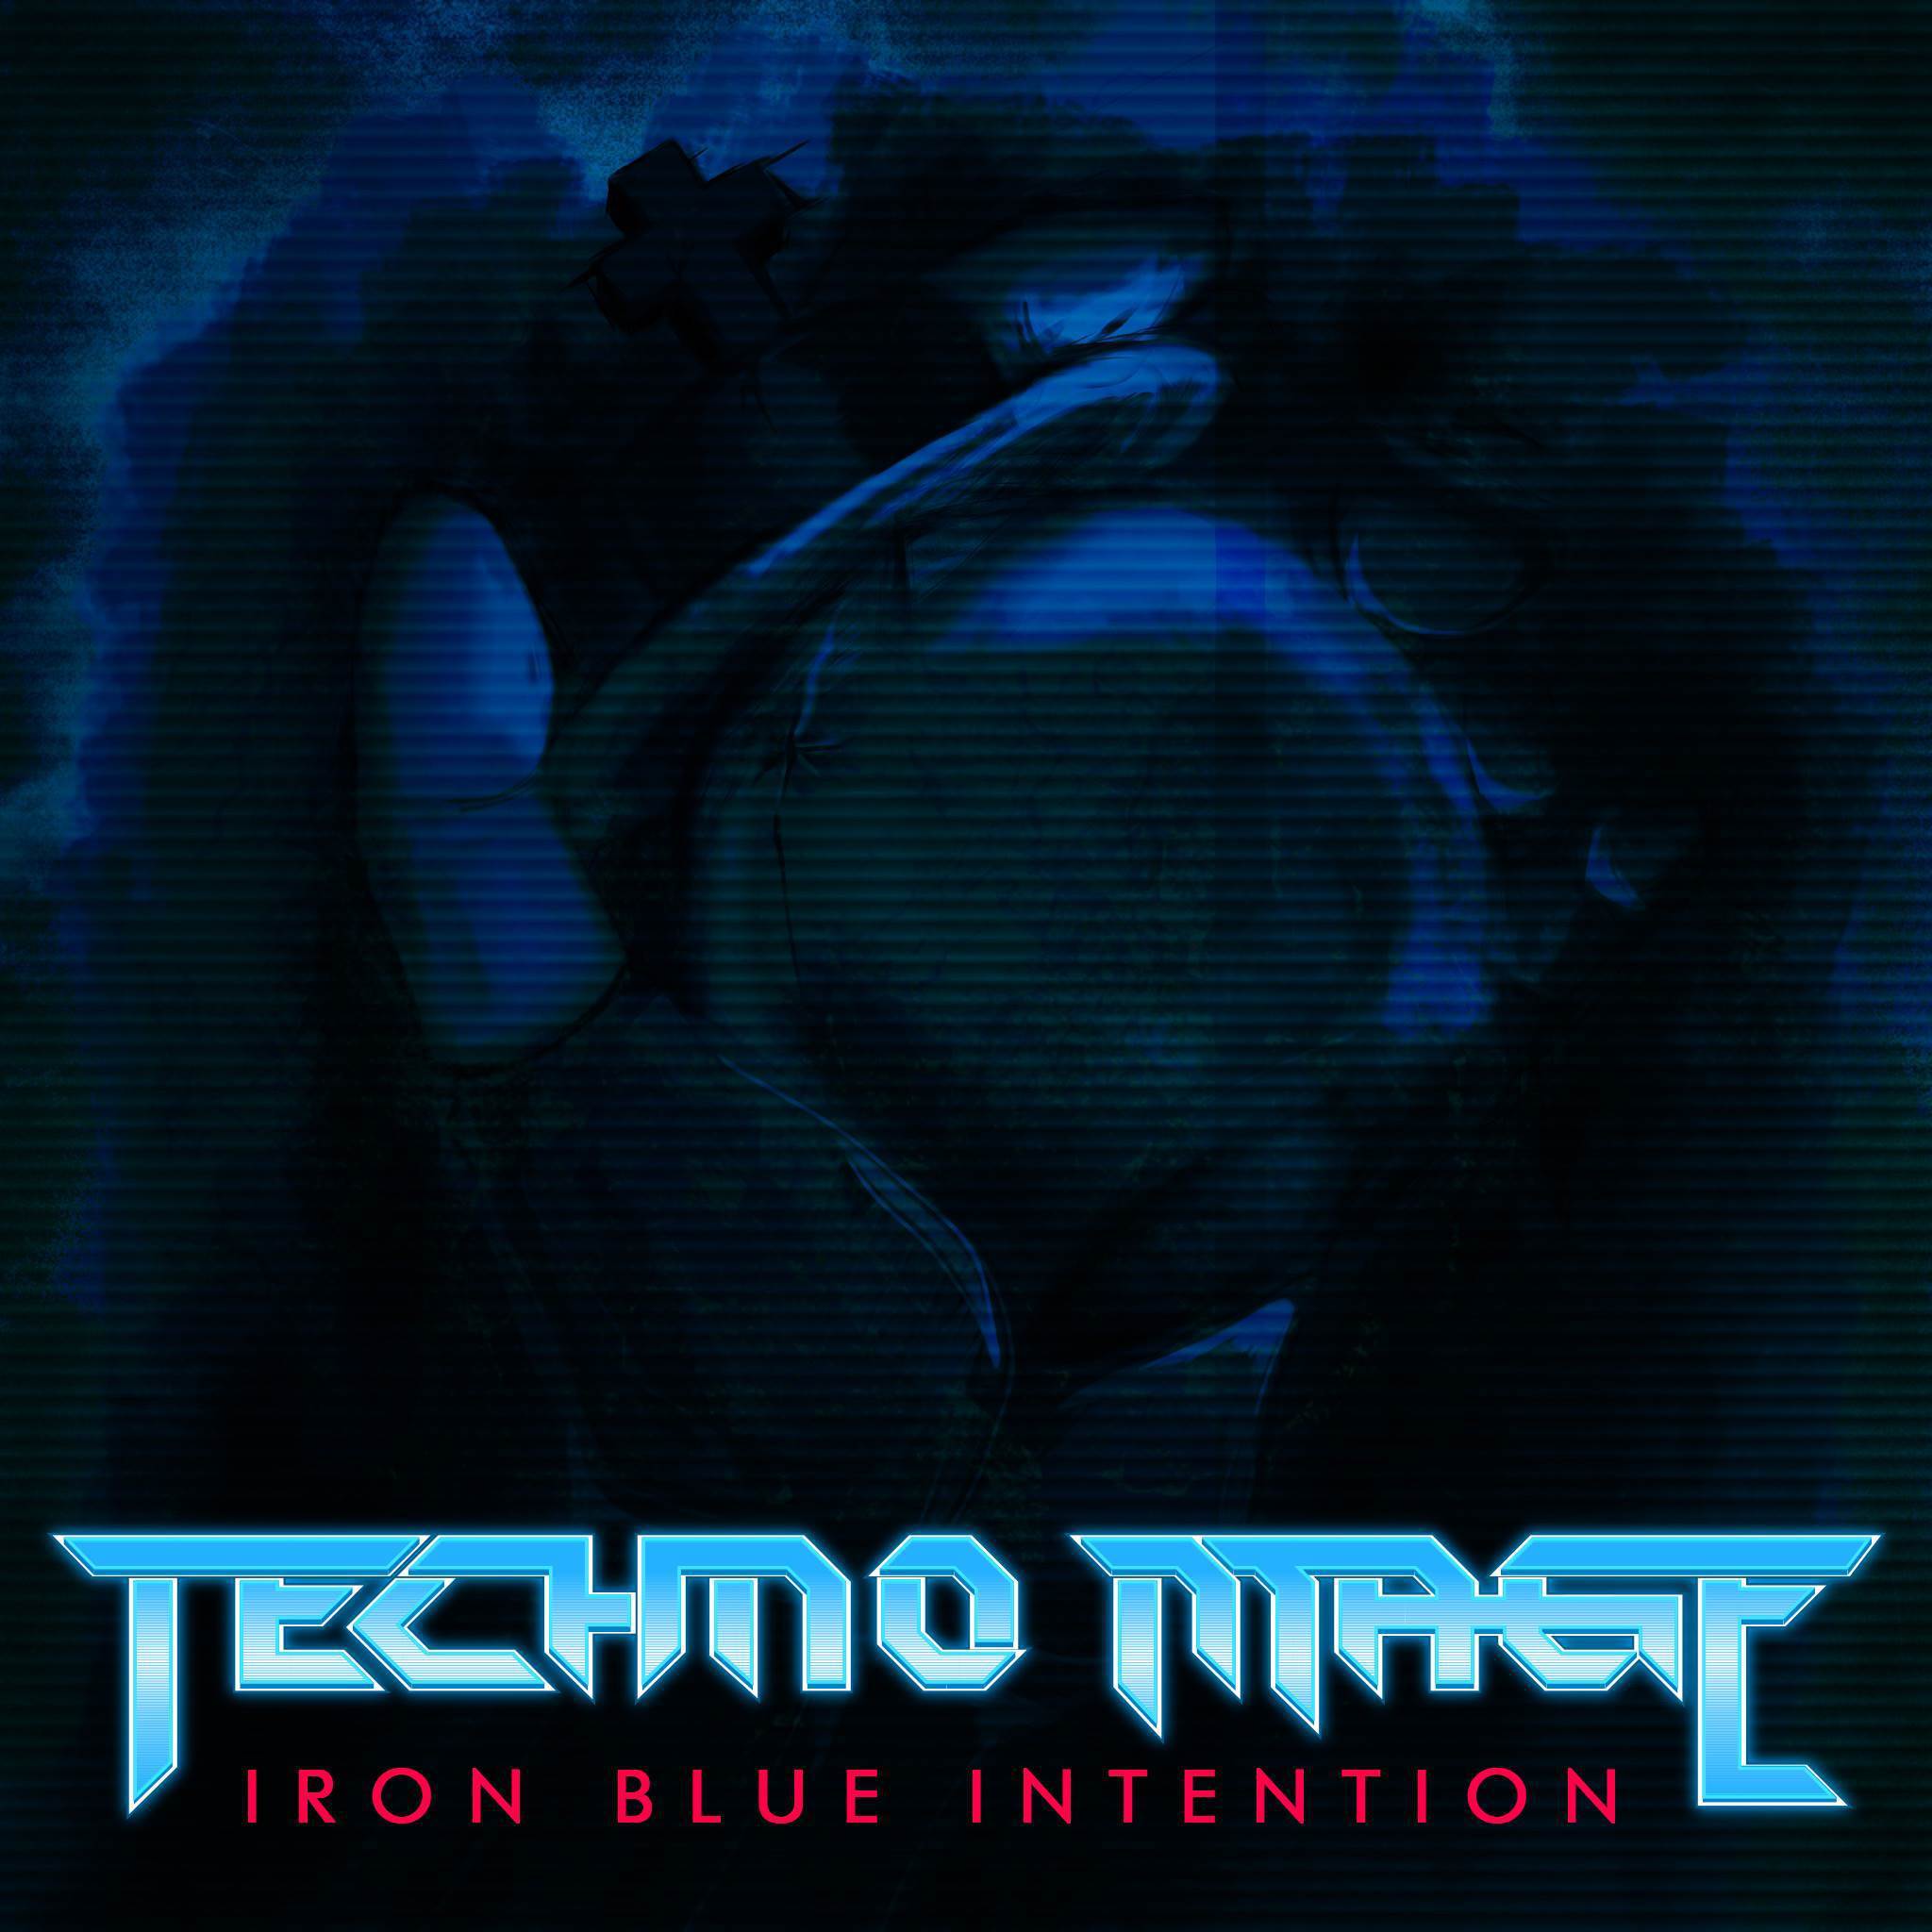 Iron Blue Intention